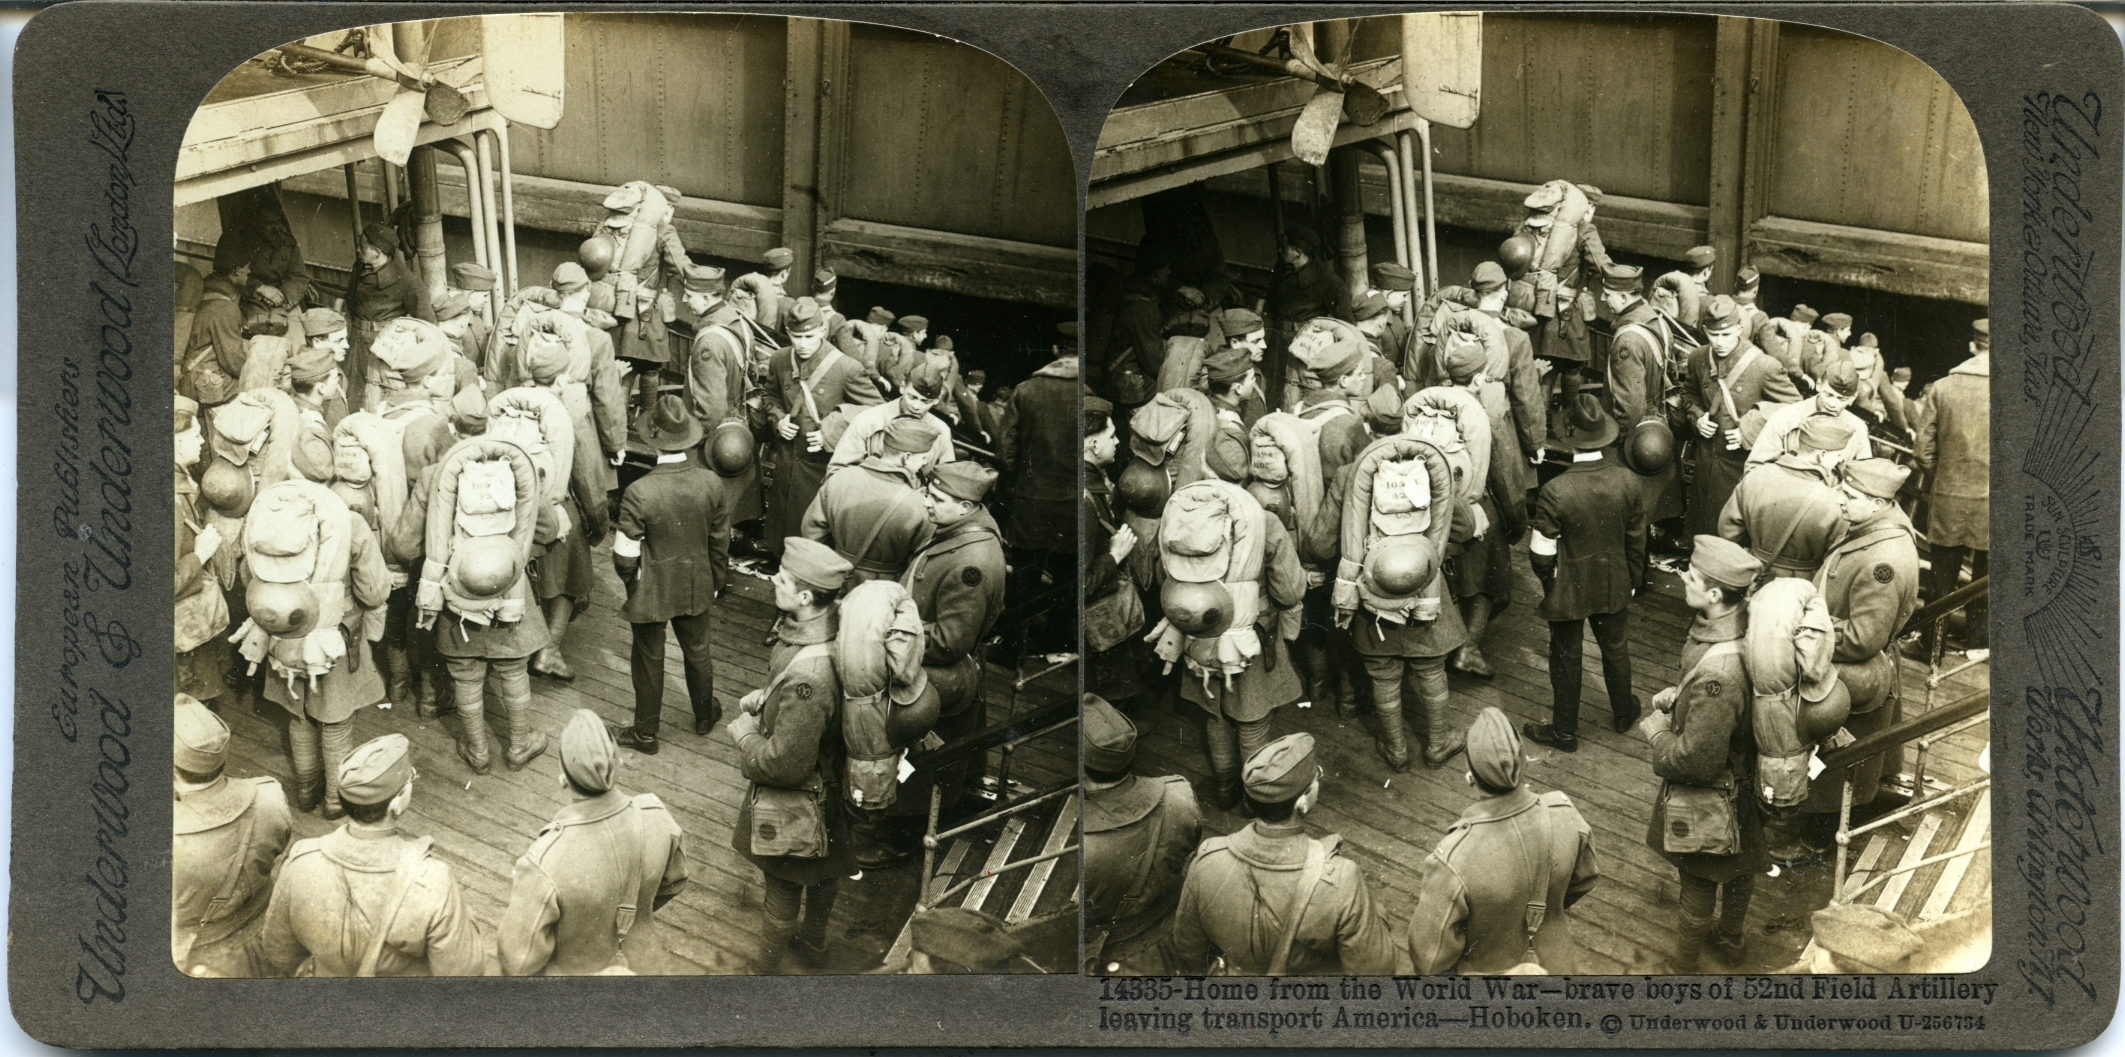 Home from the World War--brave boys of 52nd Field Artillery leaving transport America--Hoboken